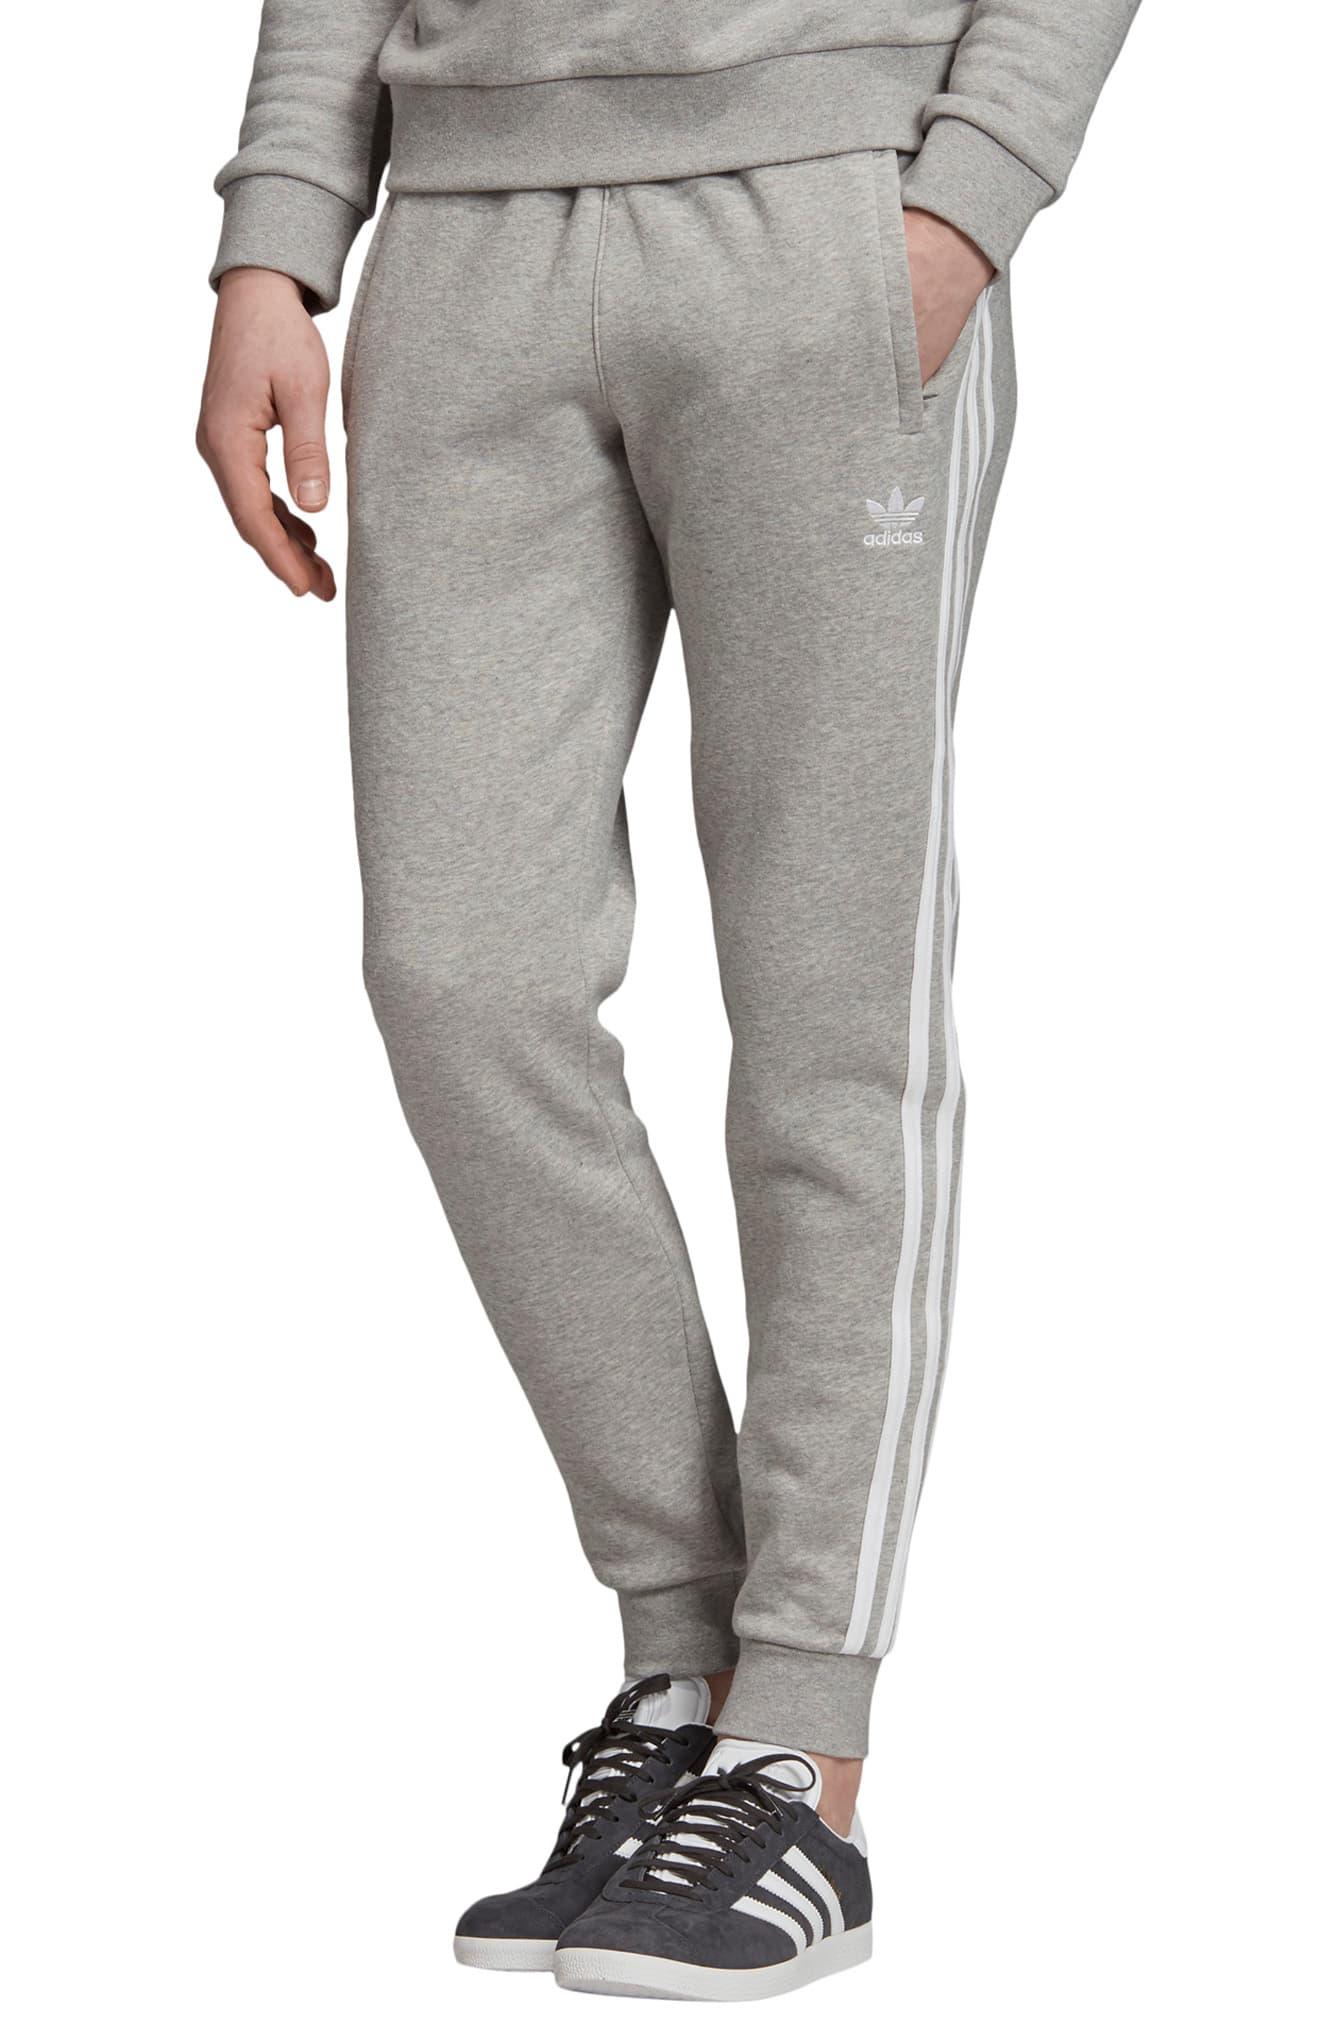 adidas Originals Cotton 3-stripes Sweatpants in Gray for Men - Lyst